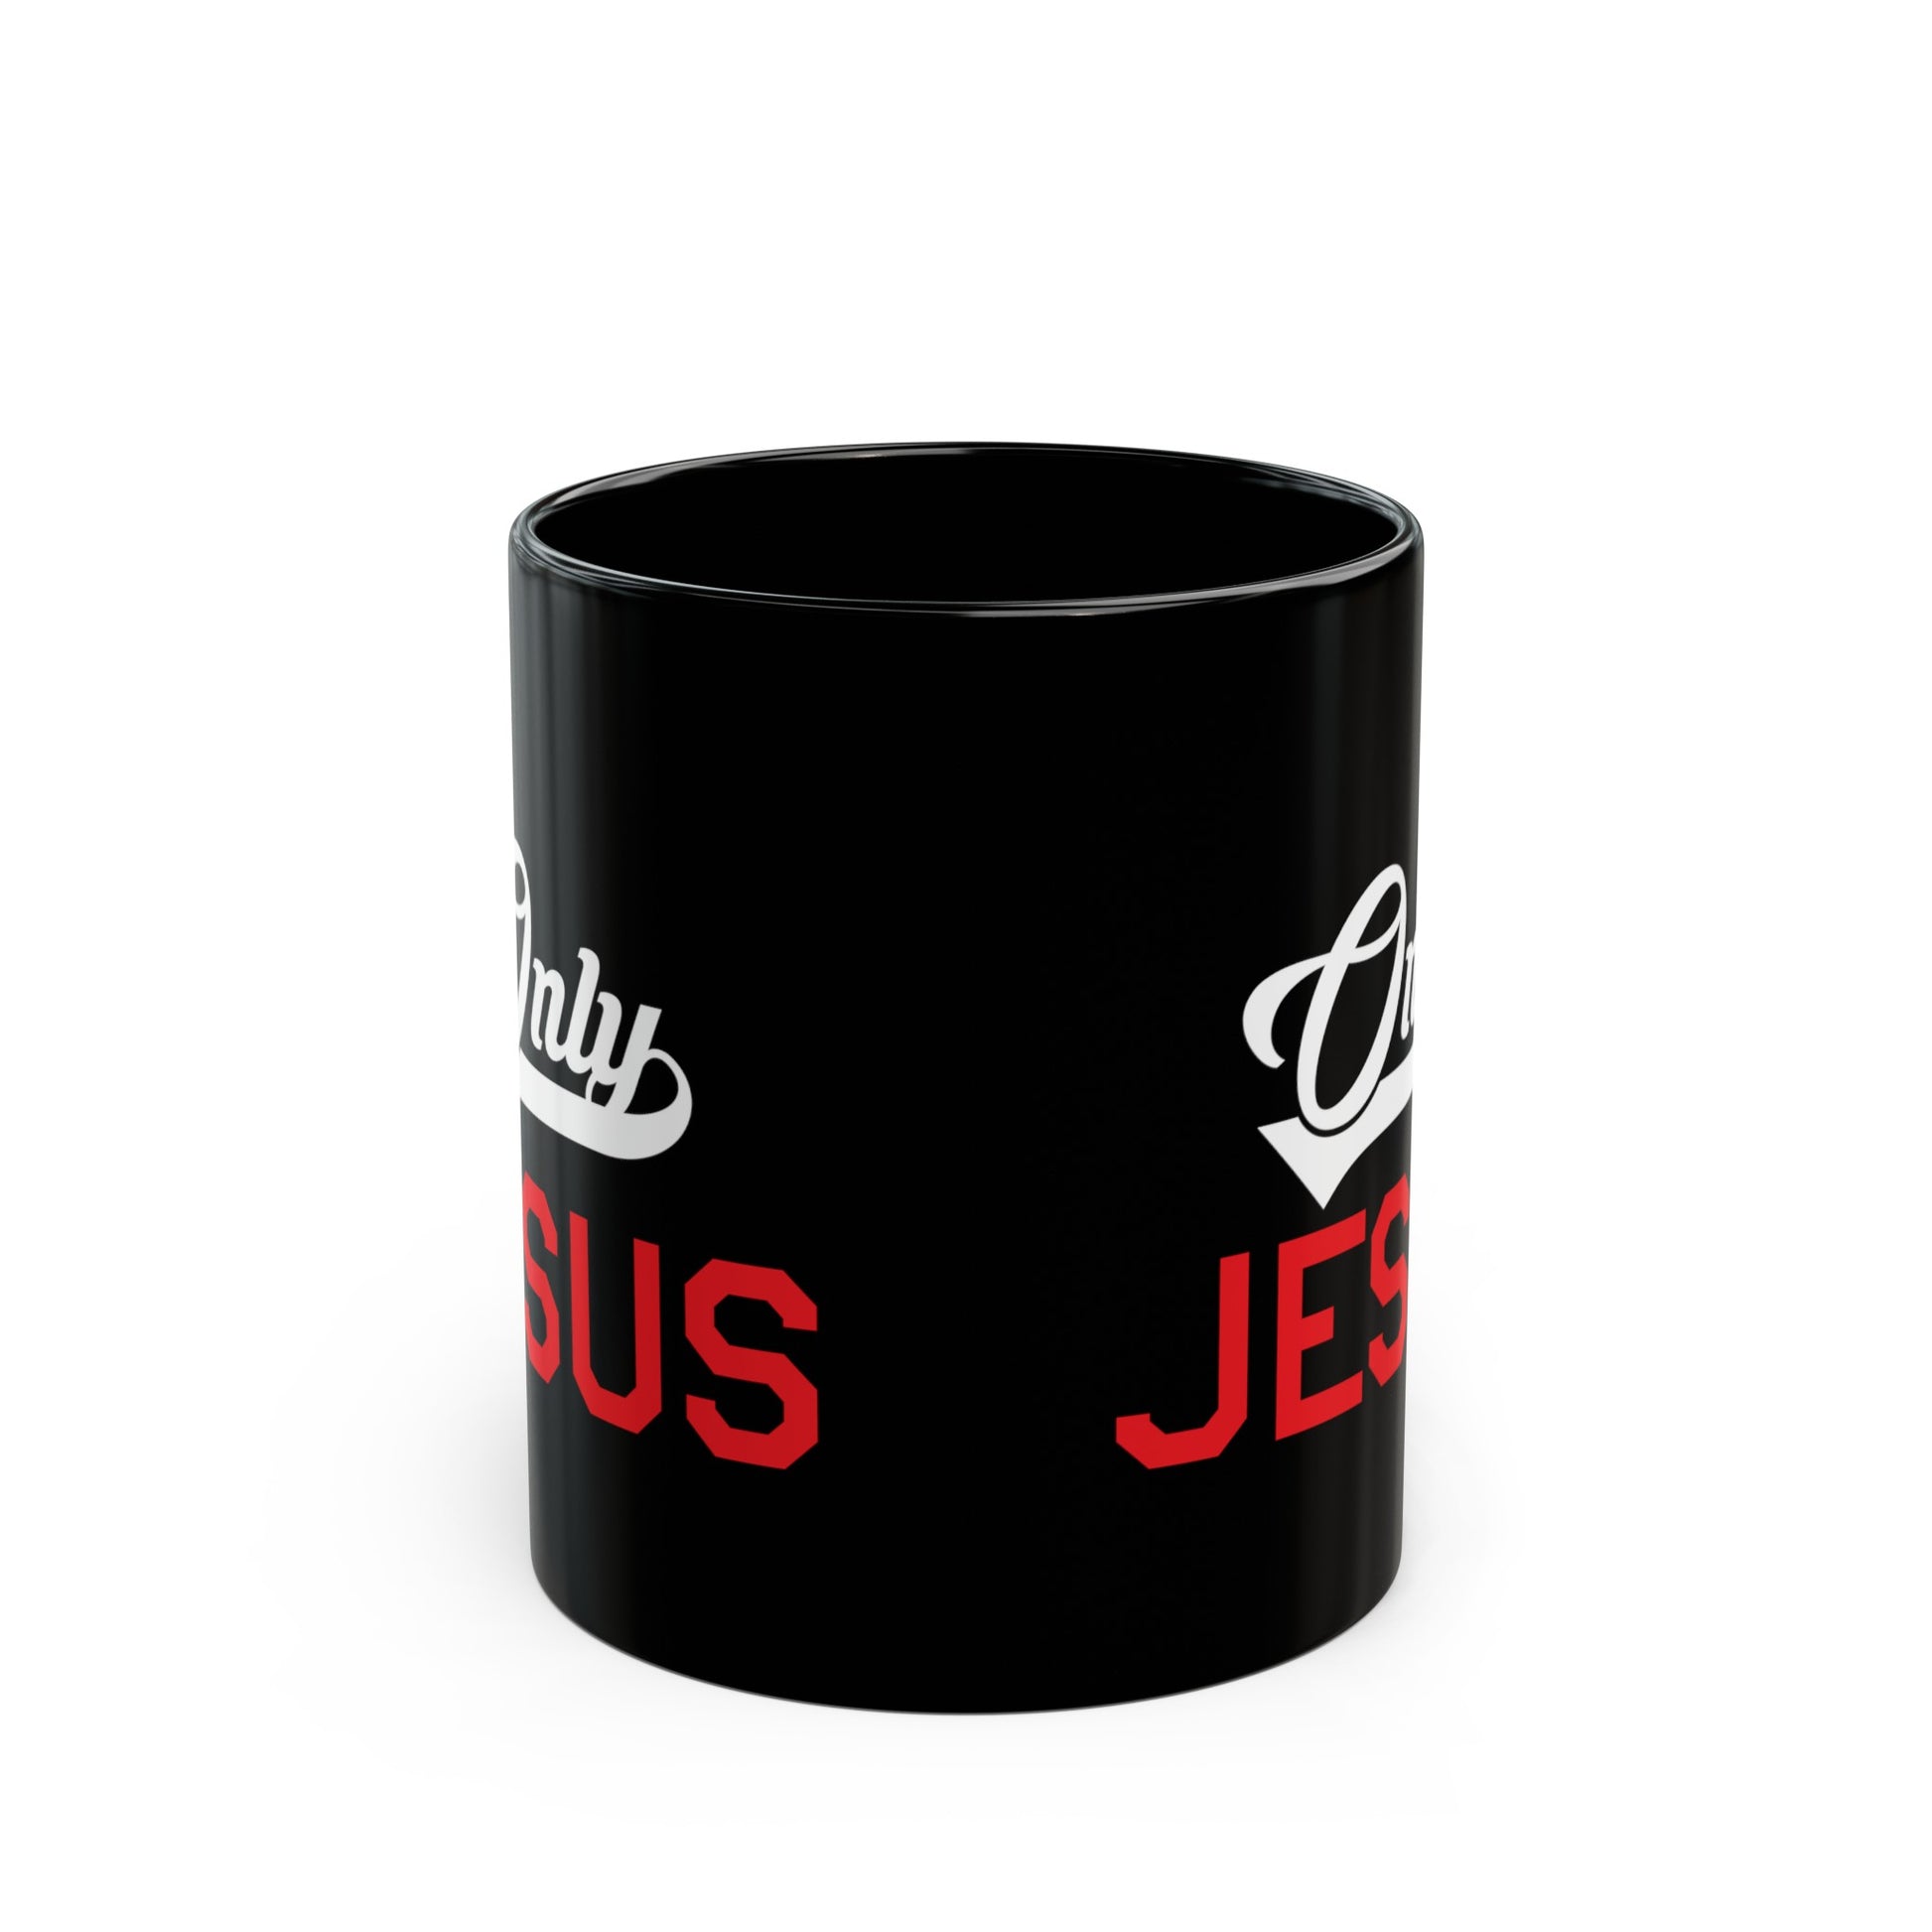 Only Jesus Black Ceramic Mug 11oz (double sided print) Printify